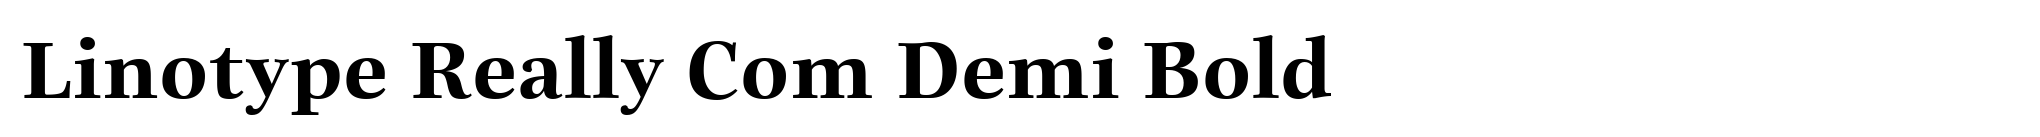 Linotype Really Com Demi Bold image